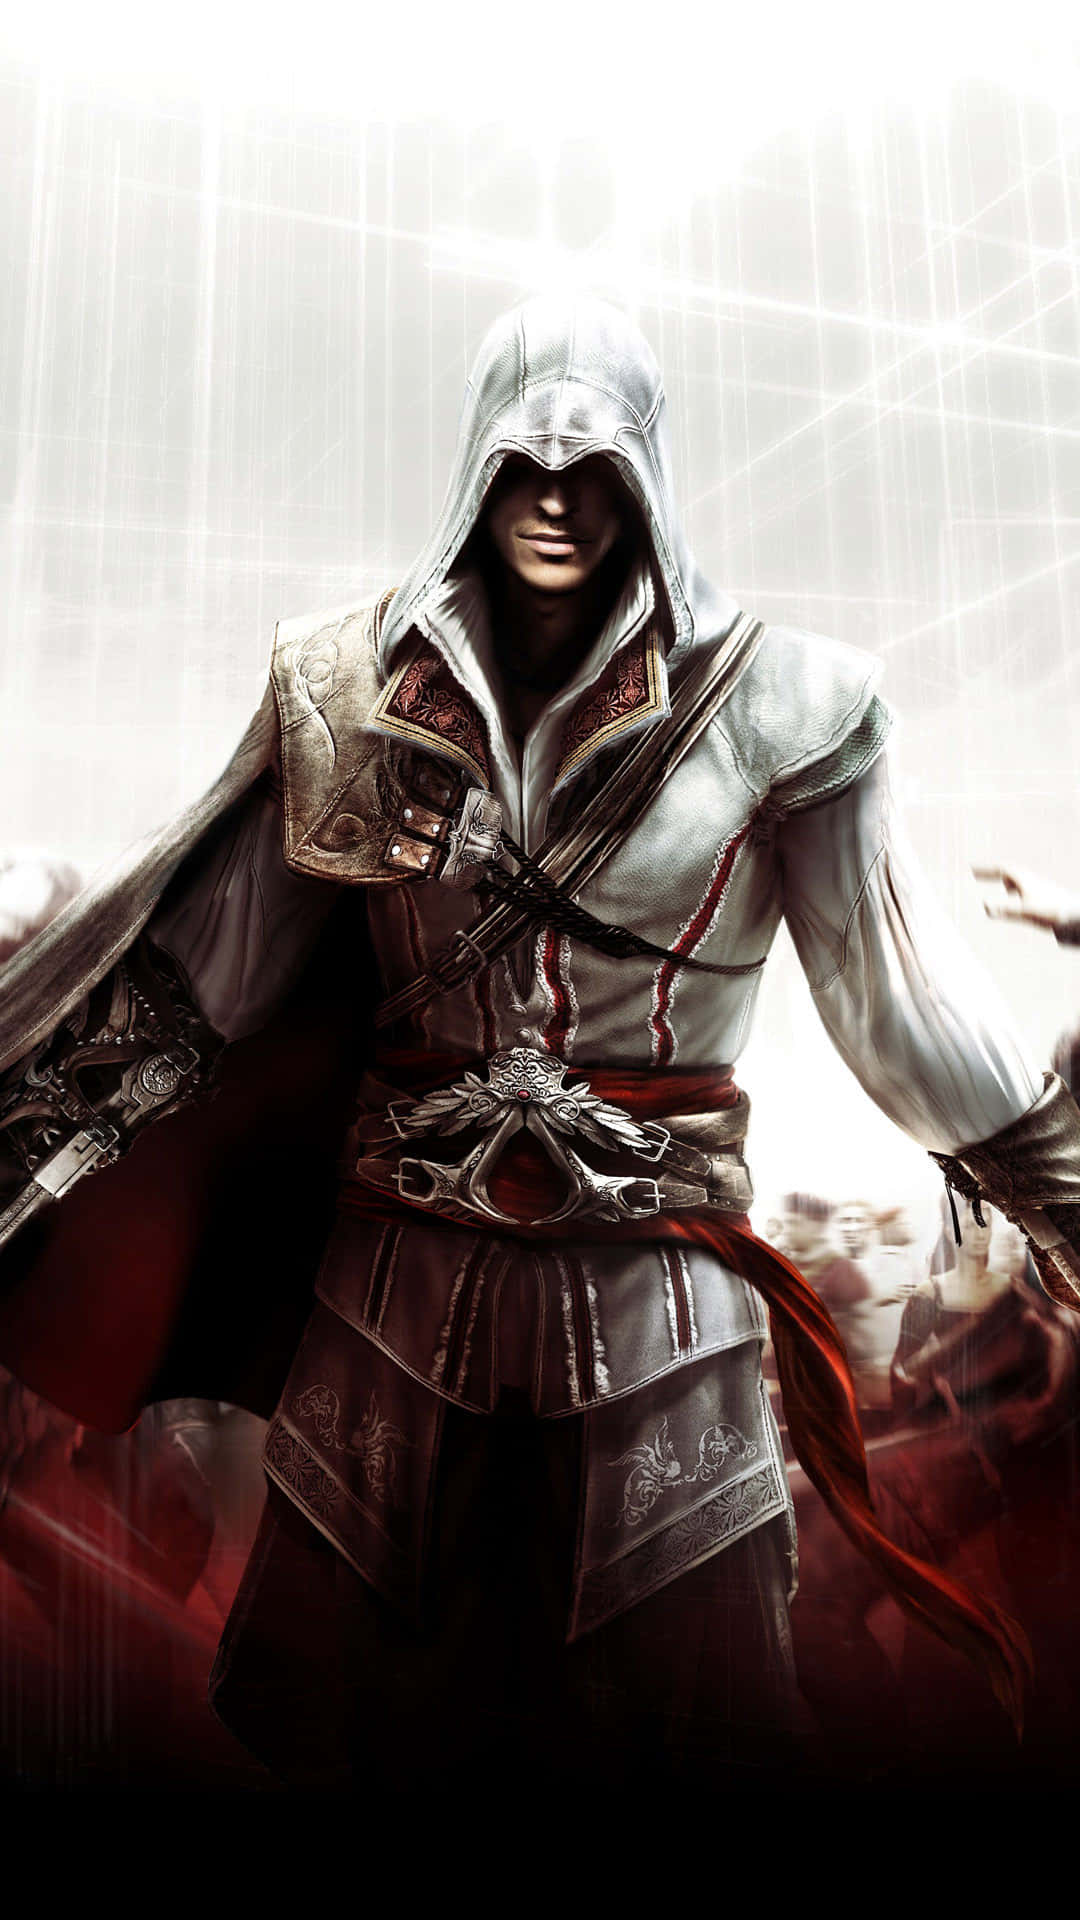 Experimentael Emocionante Mundo De Assassins Creed En Tu Iphone. Fondo de pantalla